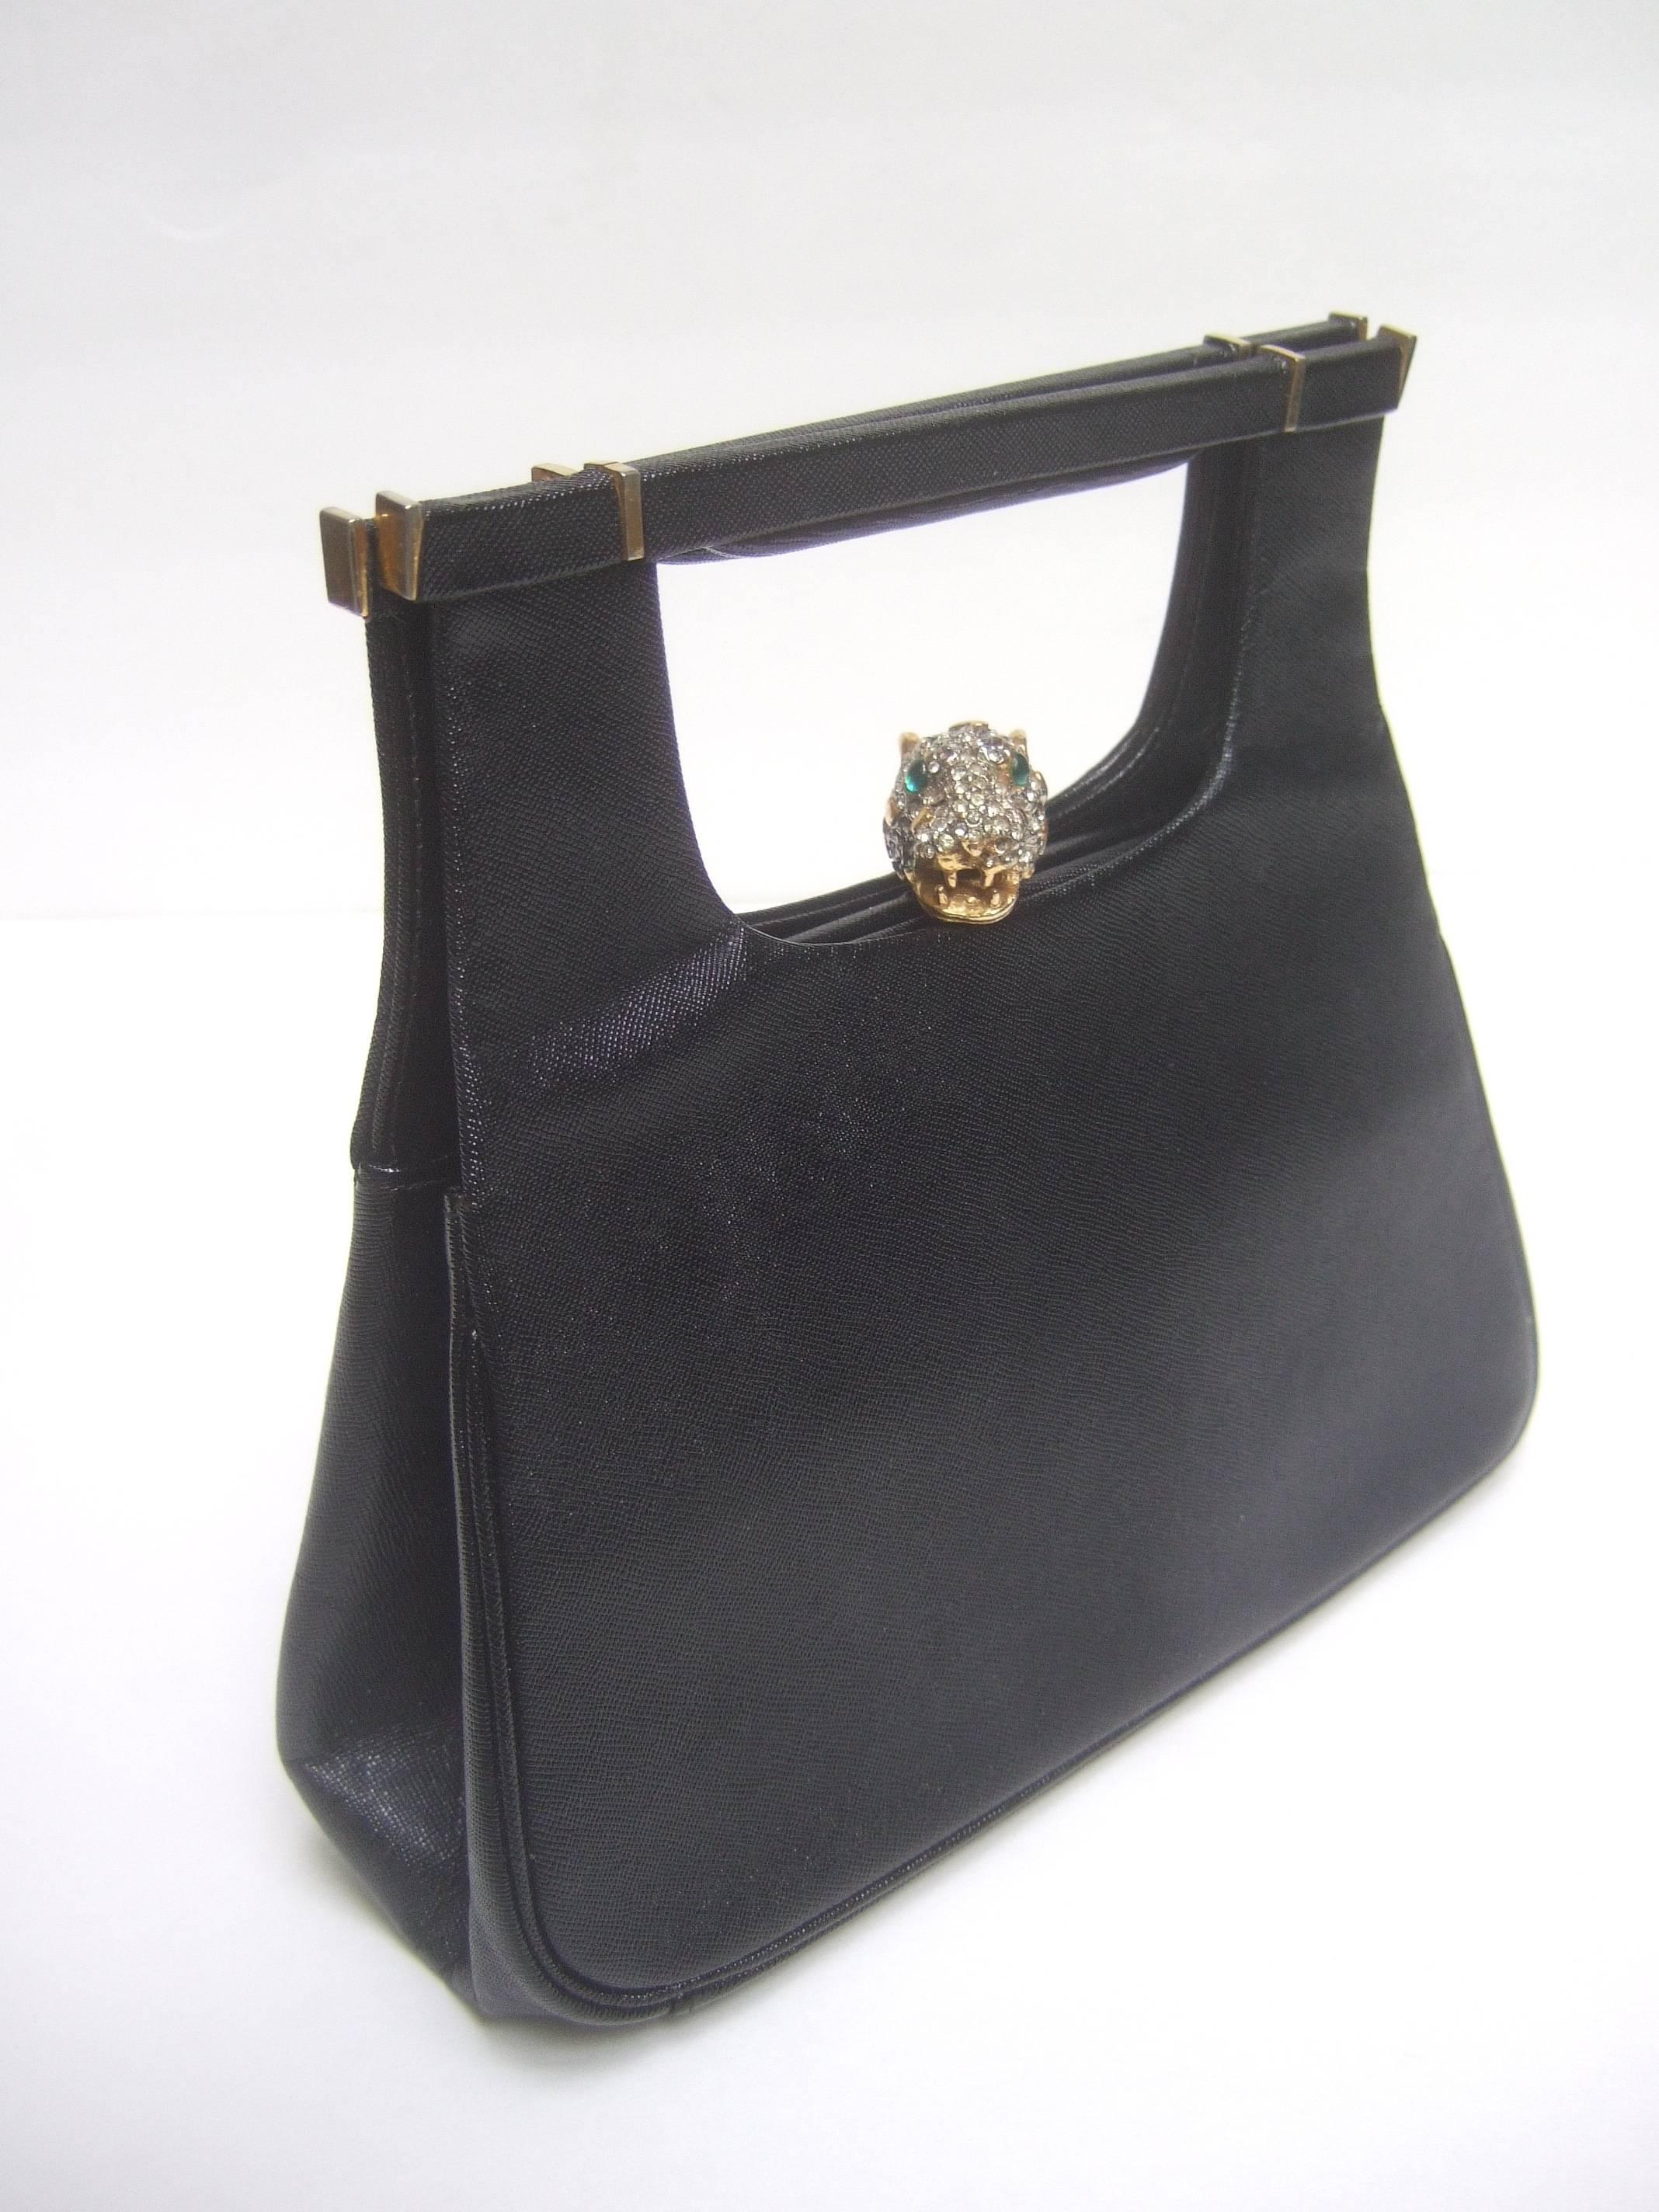 Exquisite Kenneth Lane Jeweled Jaguar Clasp Evening Bag for Rosenfeld  1